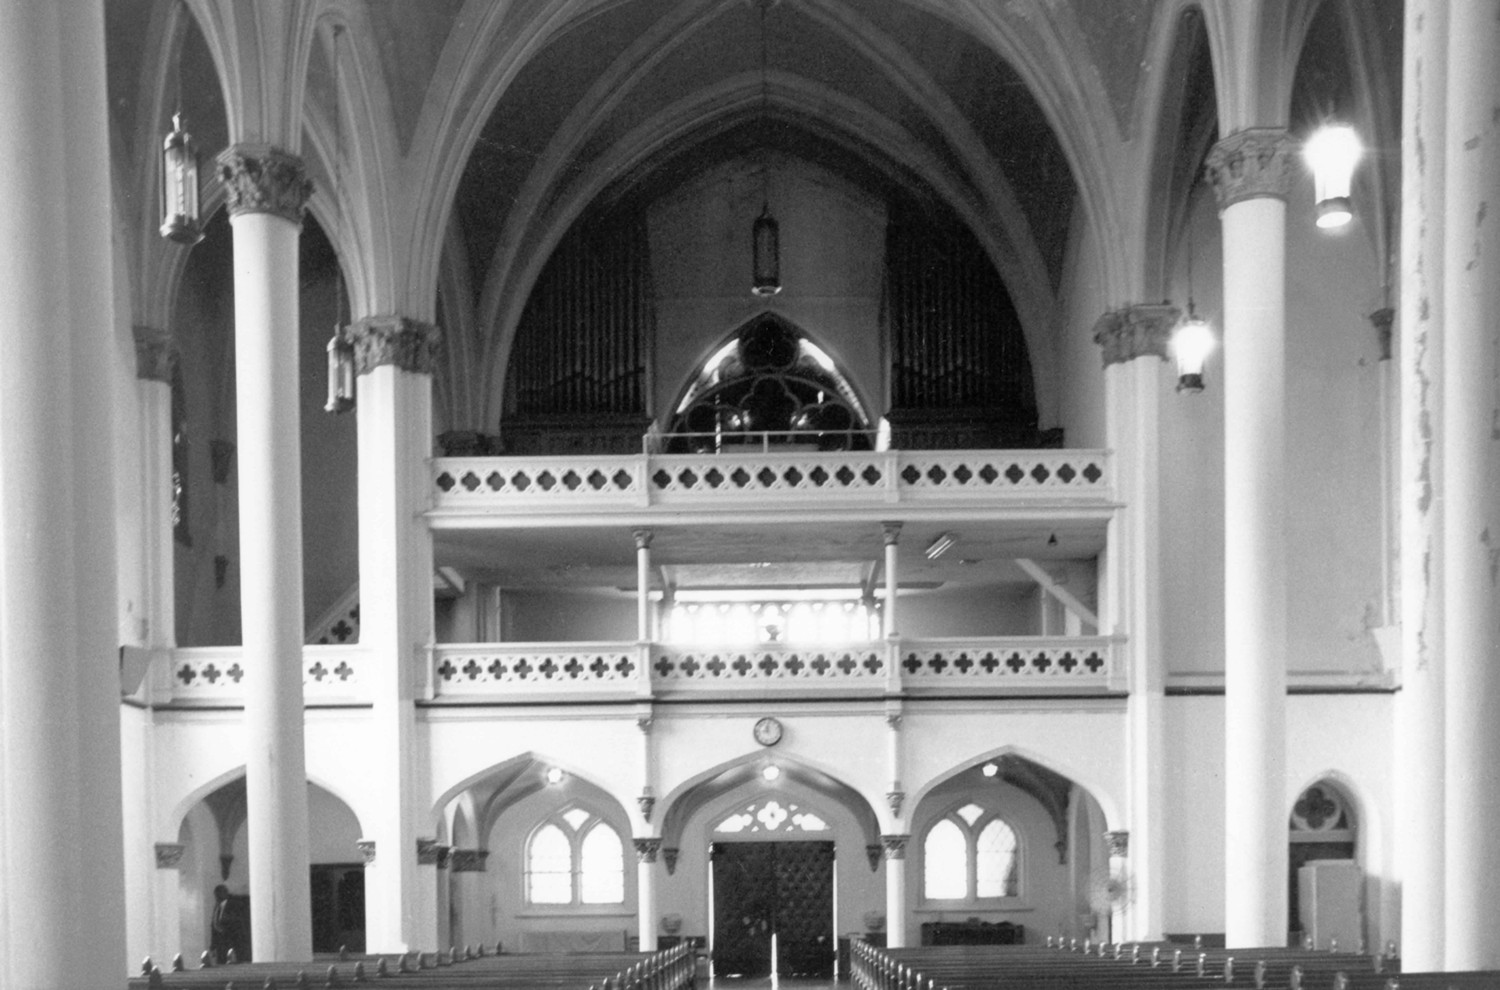 St. Augustine's Roman Catholic Church, St. Louis Missouri Nave and choir gallery (1986)